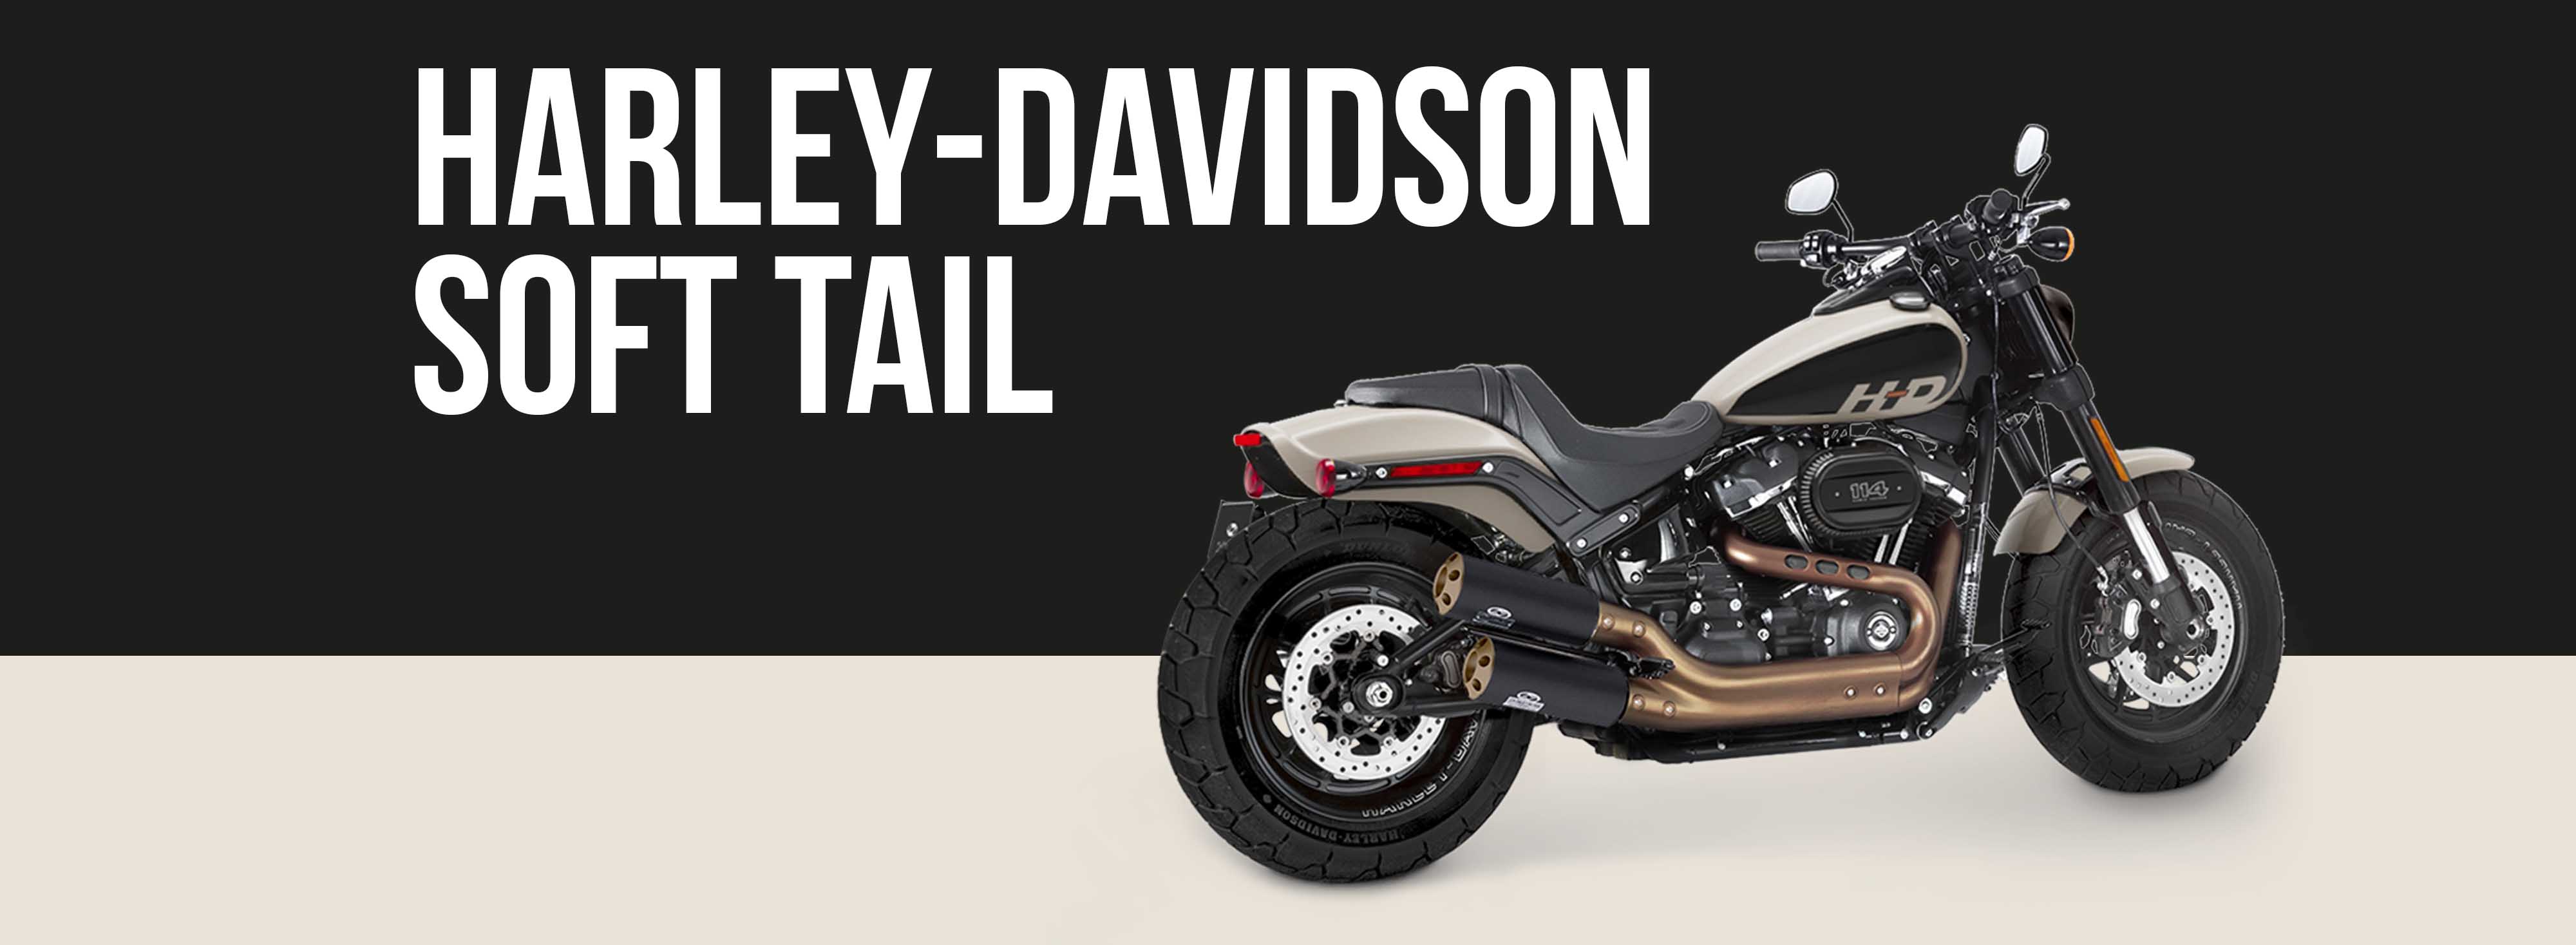 Harley-davidson Softail Motorcycle Brand Page Header